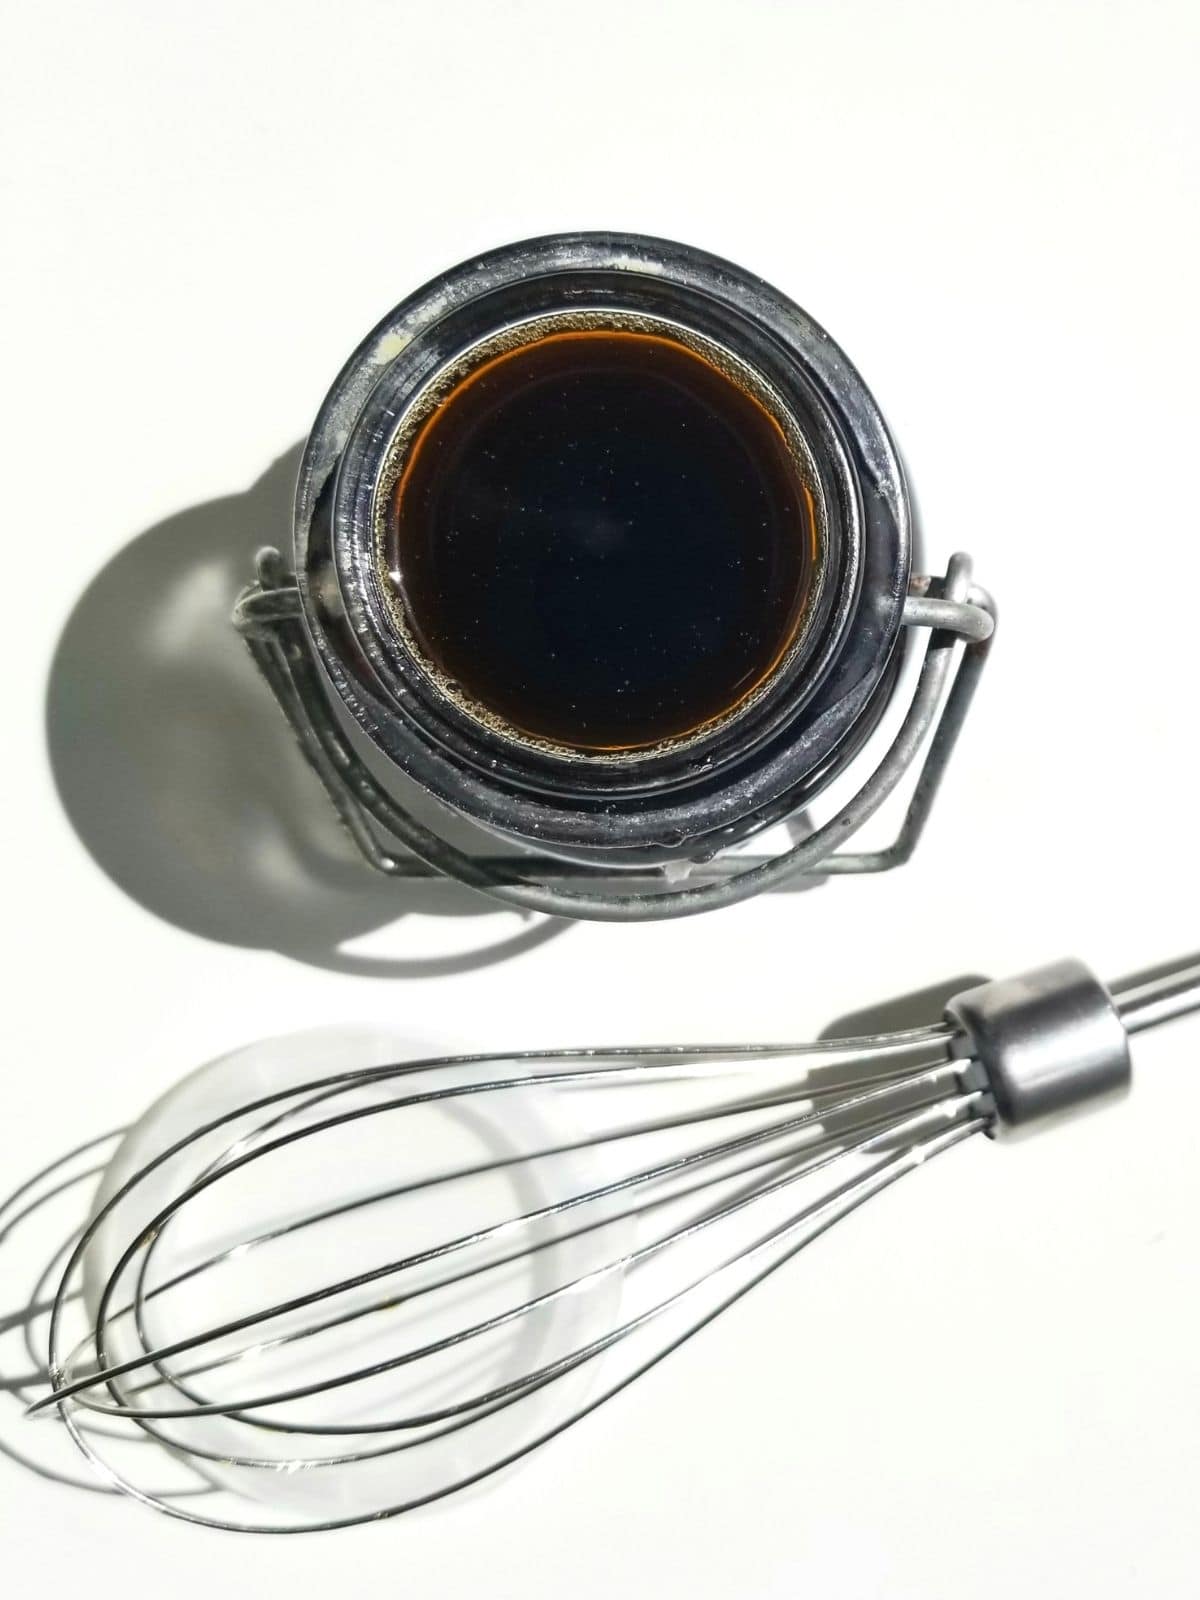 brown sugar syrup in a glass jar.